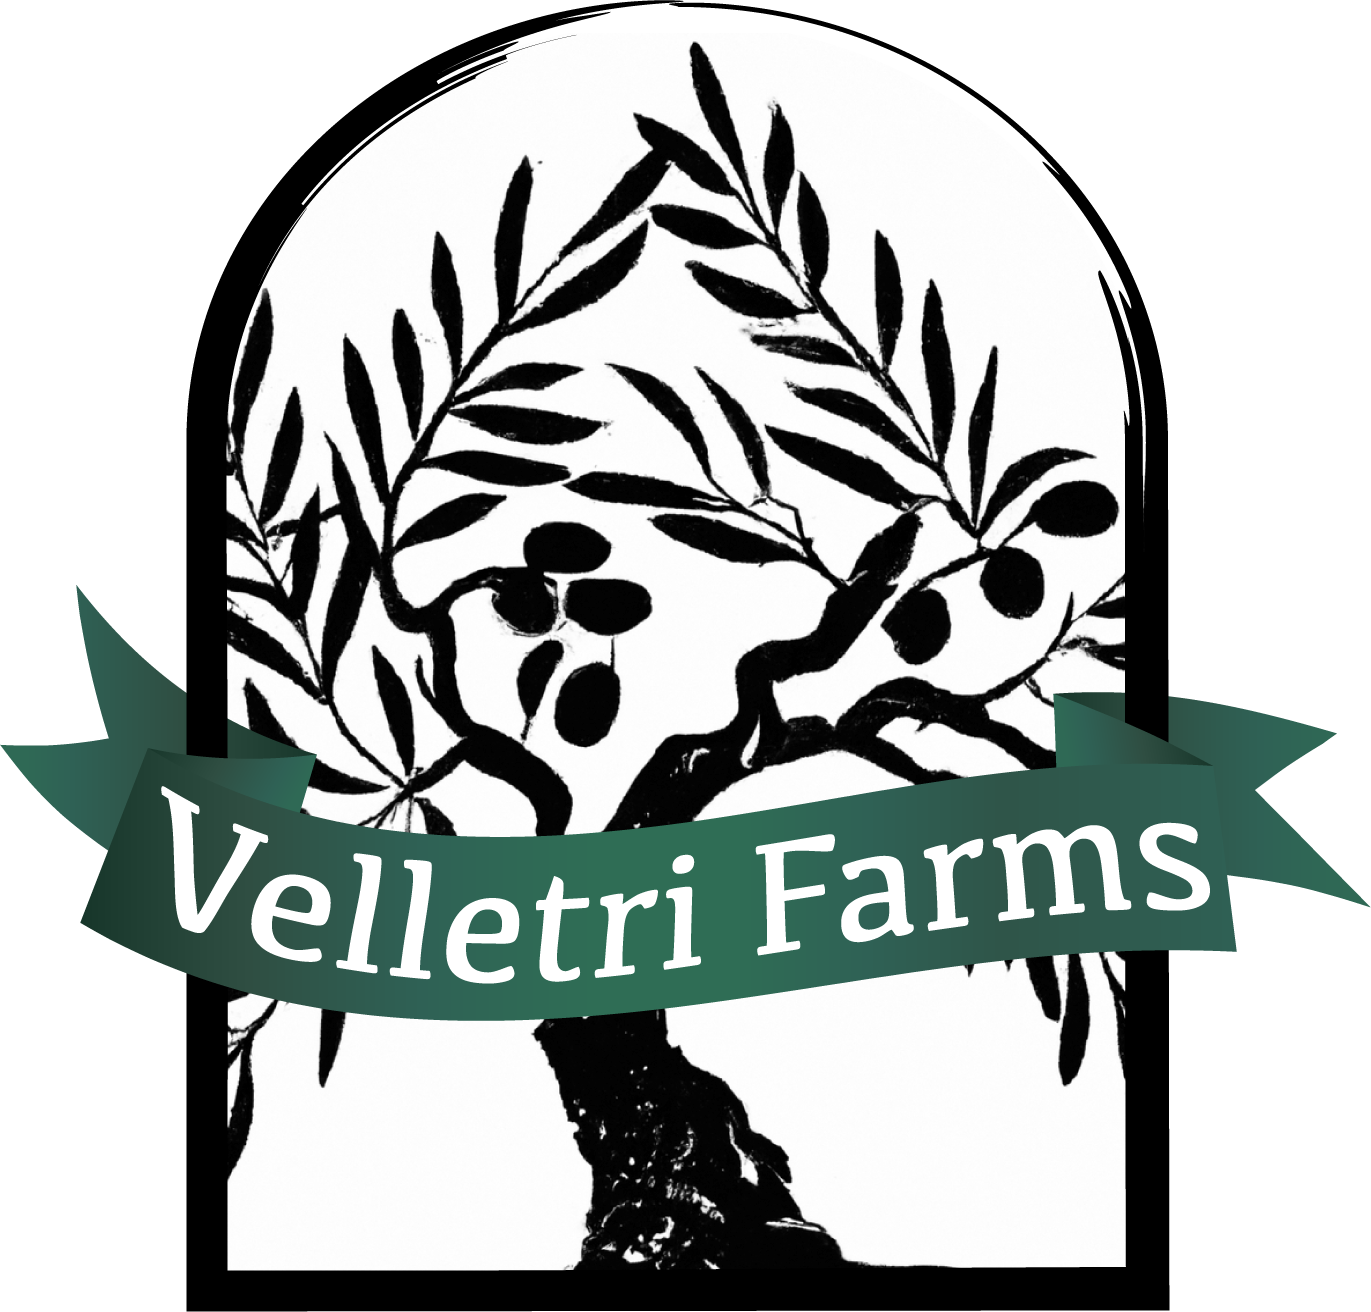 Velletri Farms